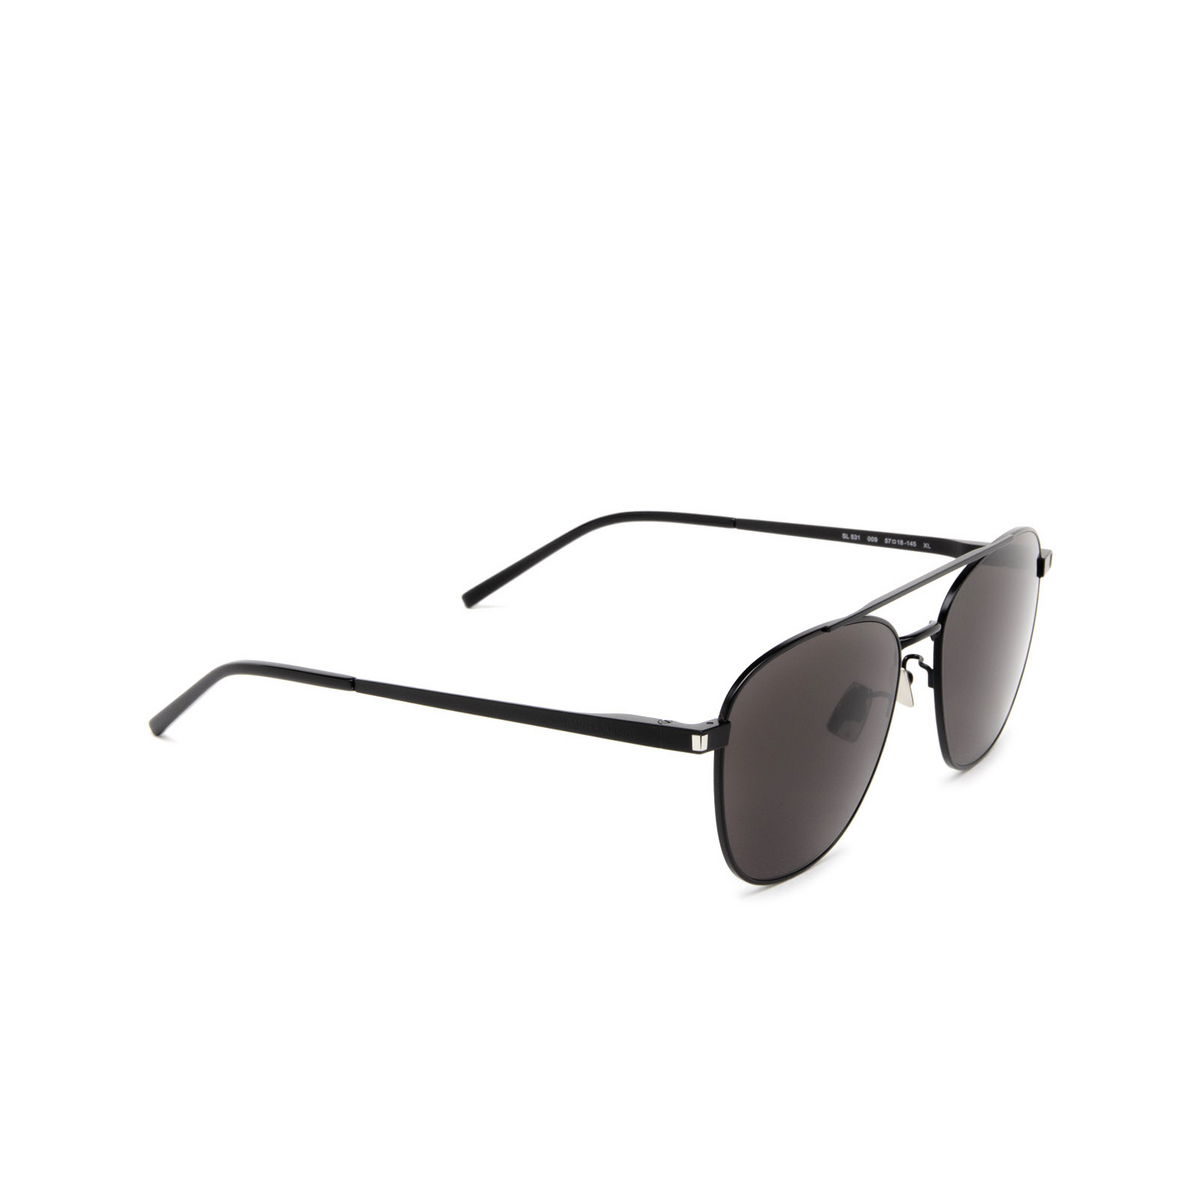 Saint Laurent® Aviator Sunglasses: SL 531 color Black 009 - three-quarters view.